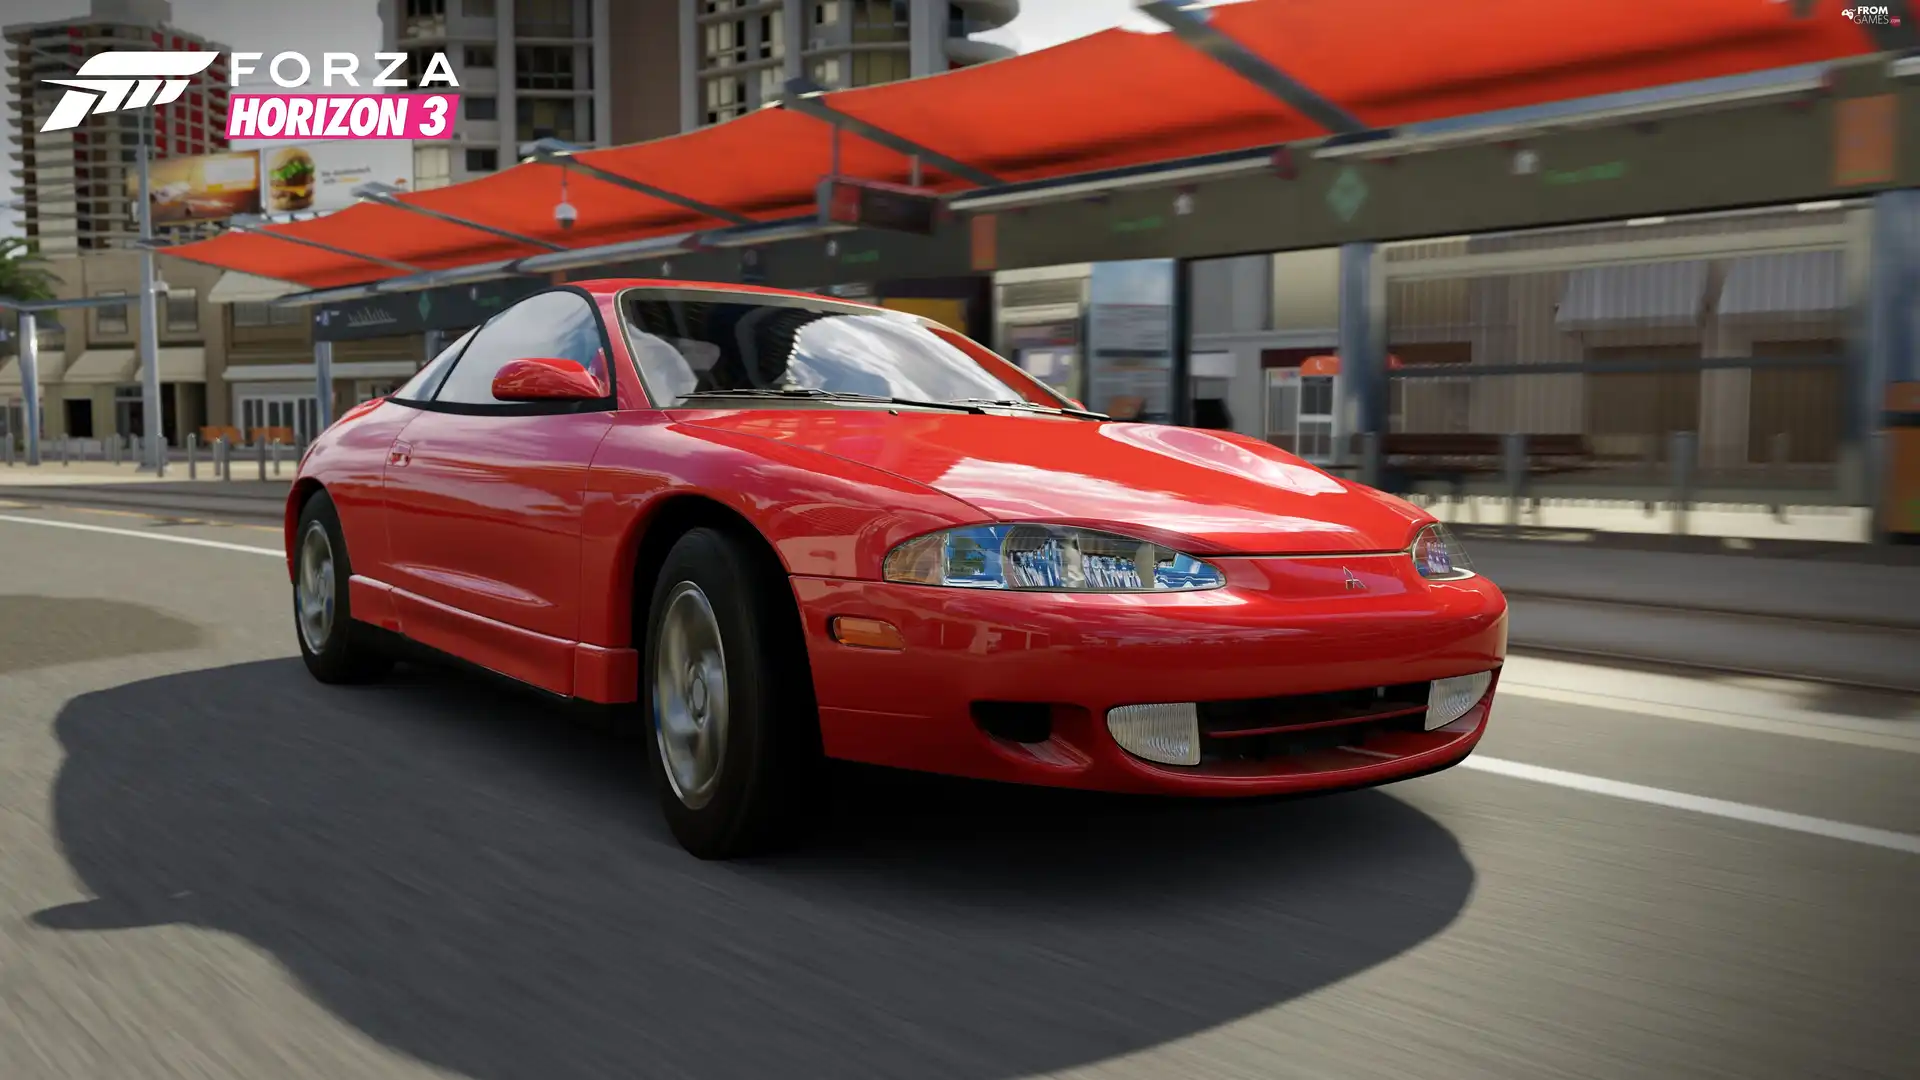 Red, game, Forza Horizon 3, Automobile